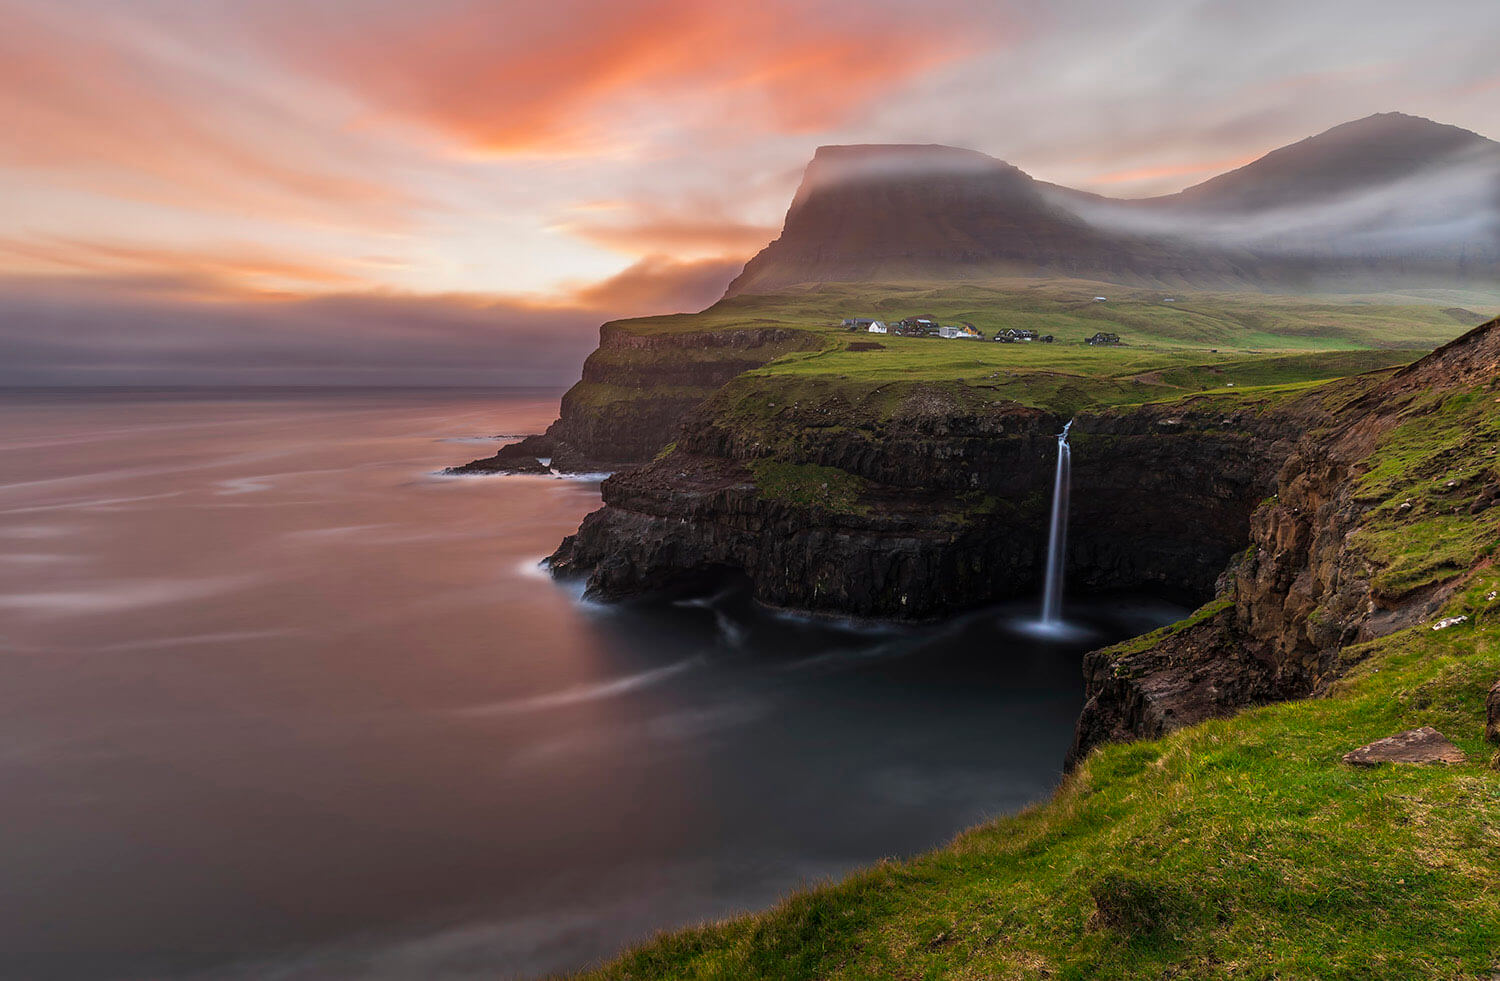 Gásadalur village and Múlafossur waterfall, Vágar, Faroe Islands